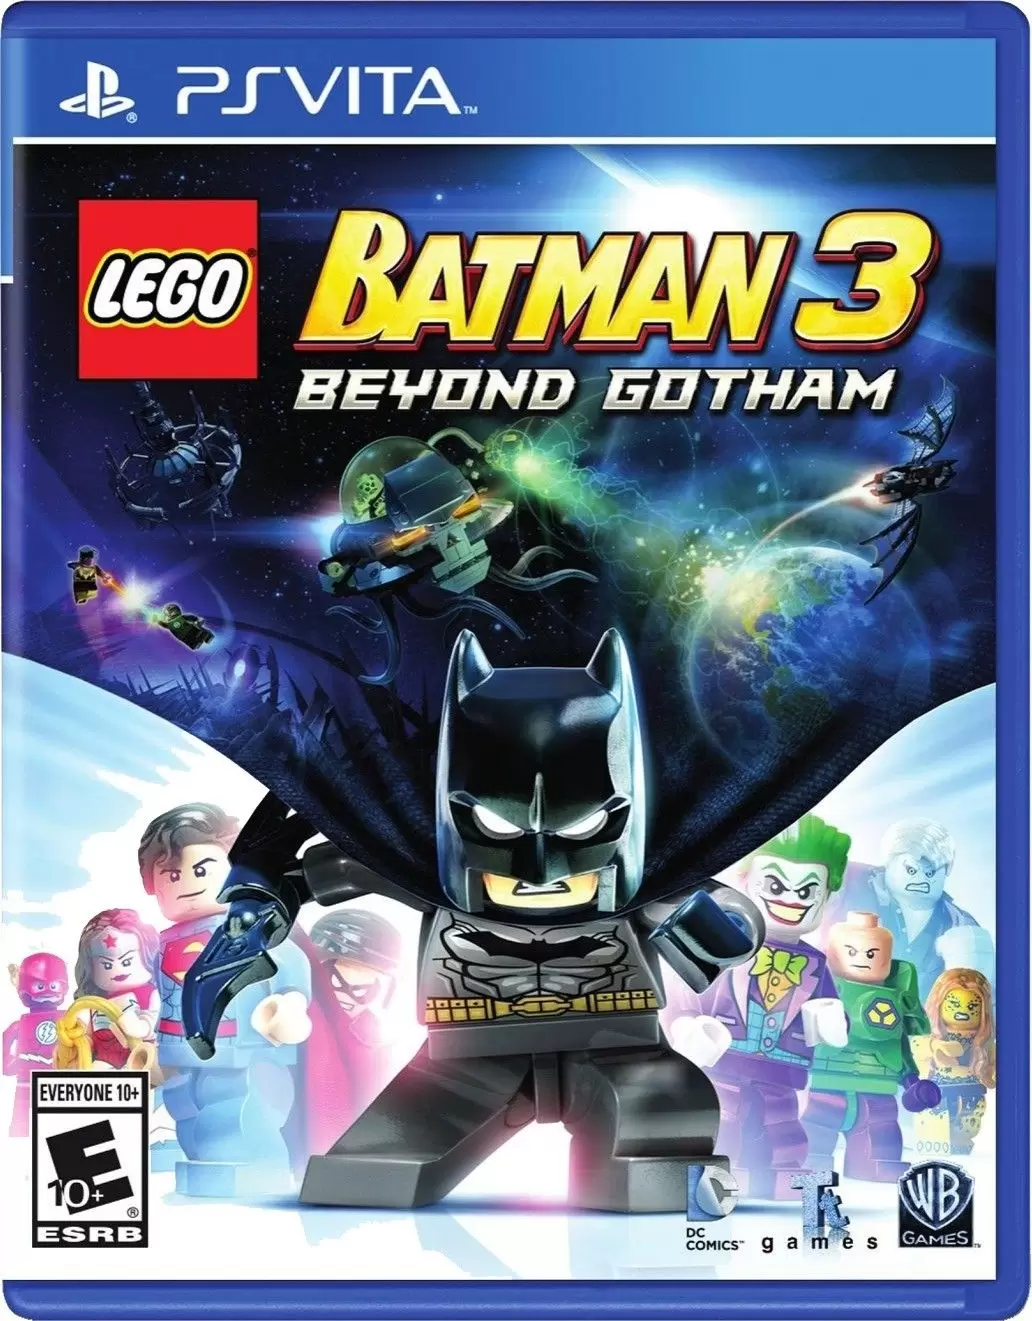 PS Vita Games - LEGO Batman 3: Beyond Gotham